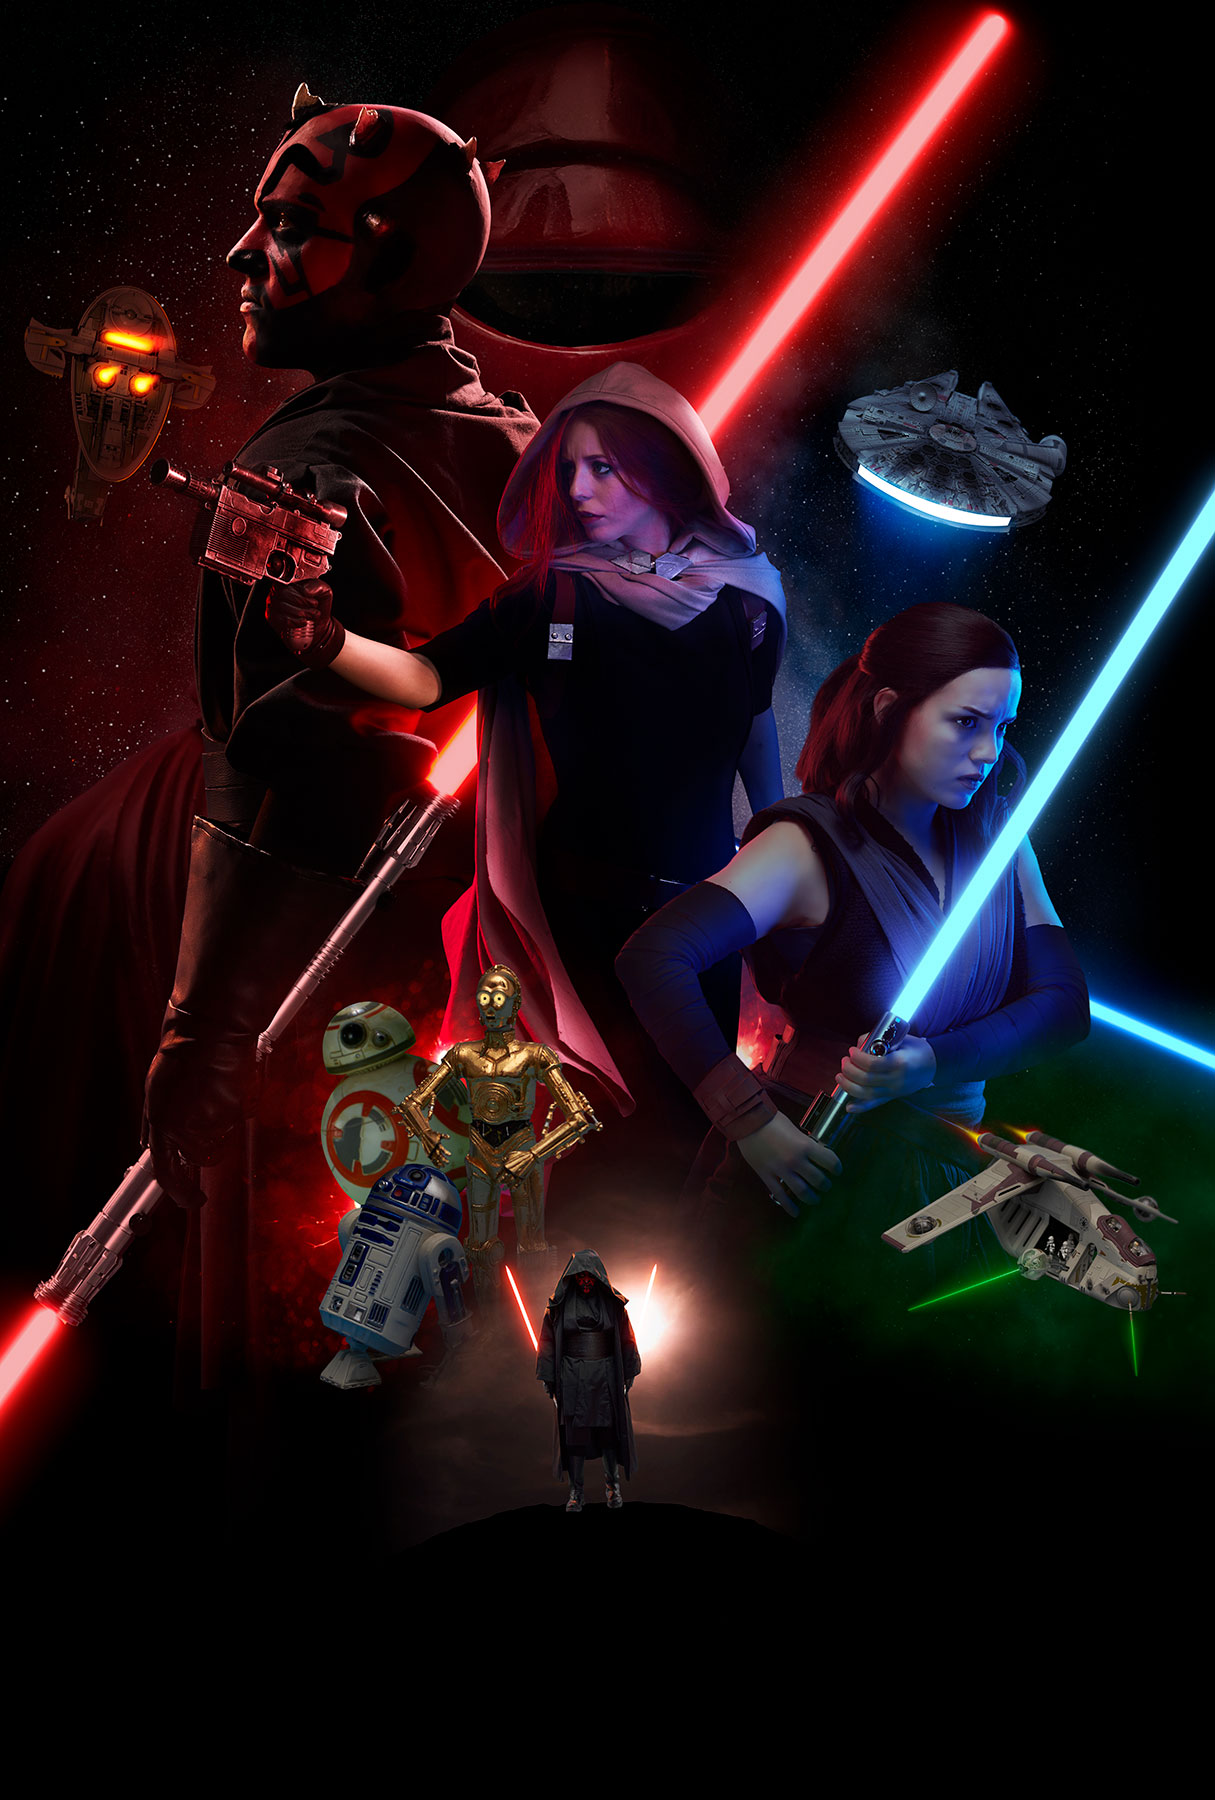 Sayanoff Arthur Star Wars Poster 02 09